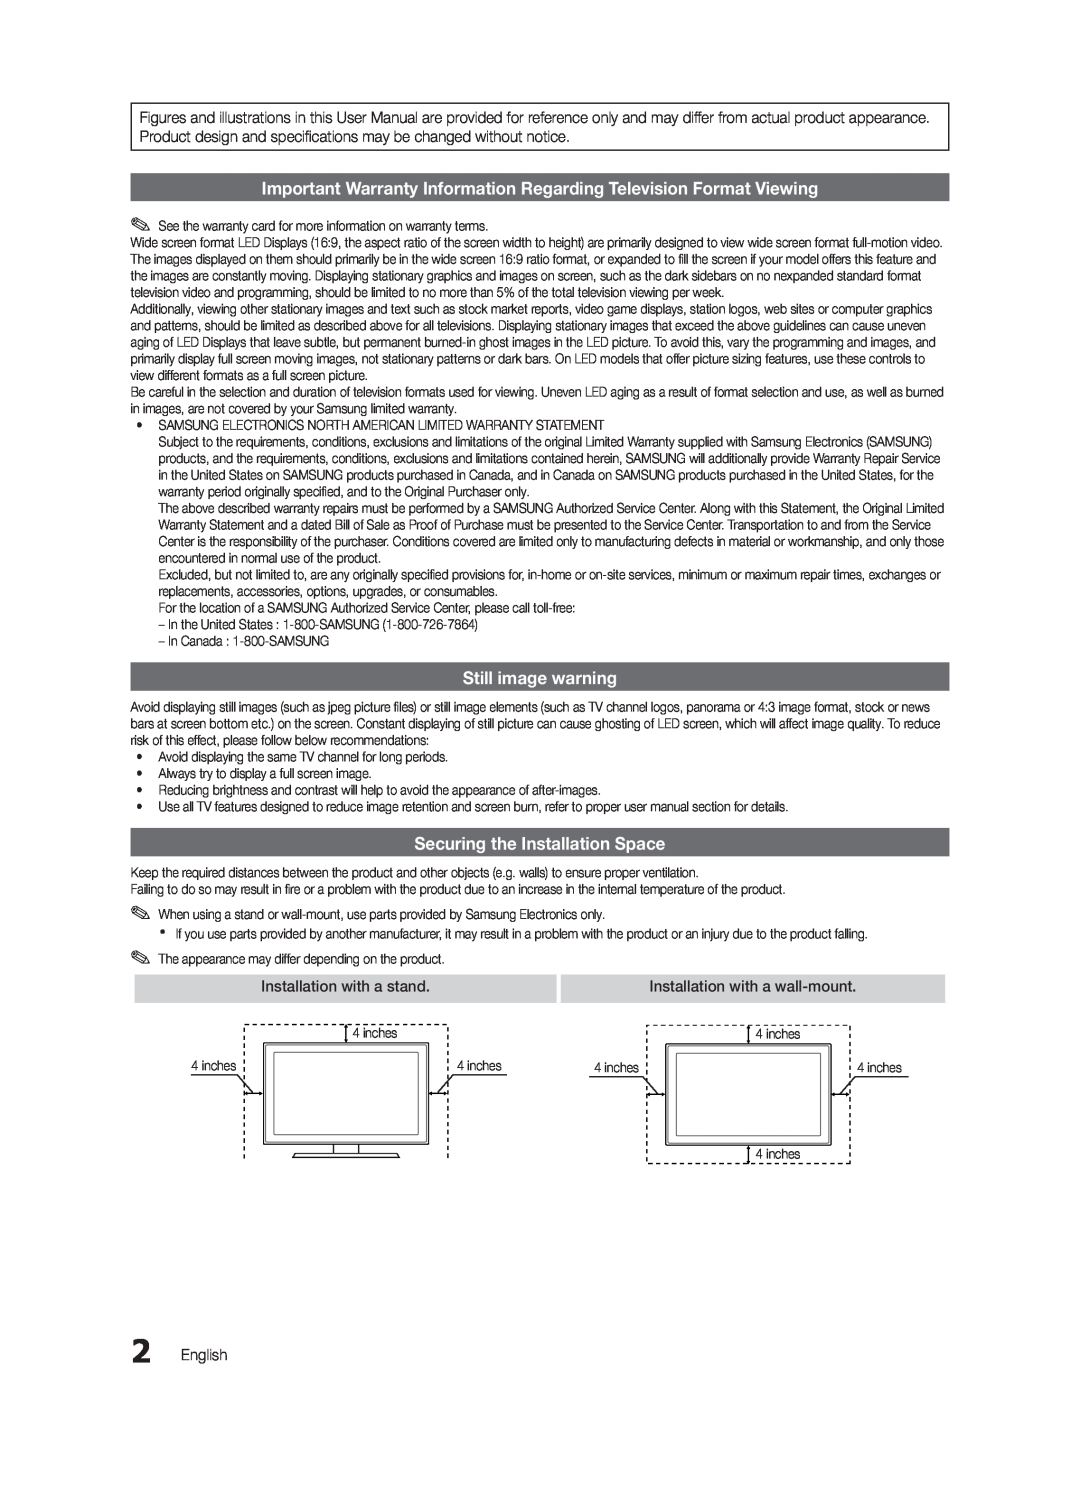 Samsung UN46C6900 Important Warranty Information Regarding Television Format Viewing, Still image warning, English 